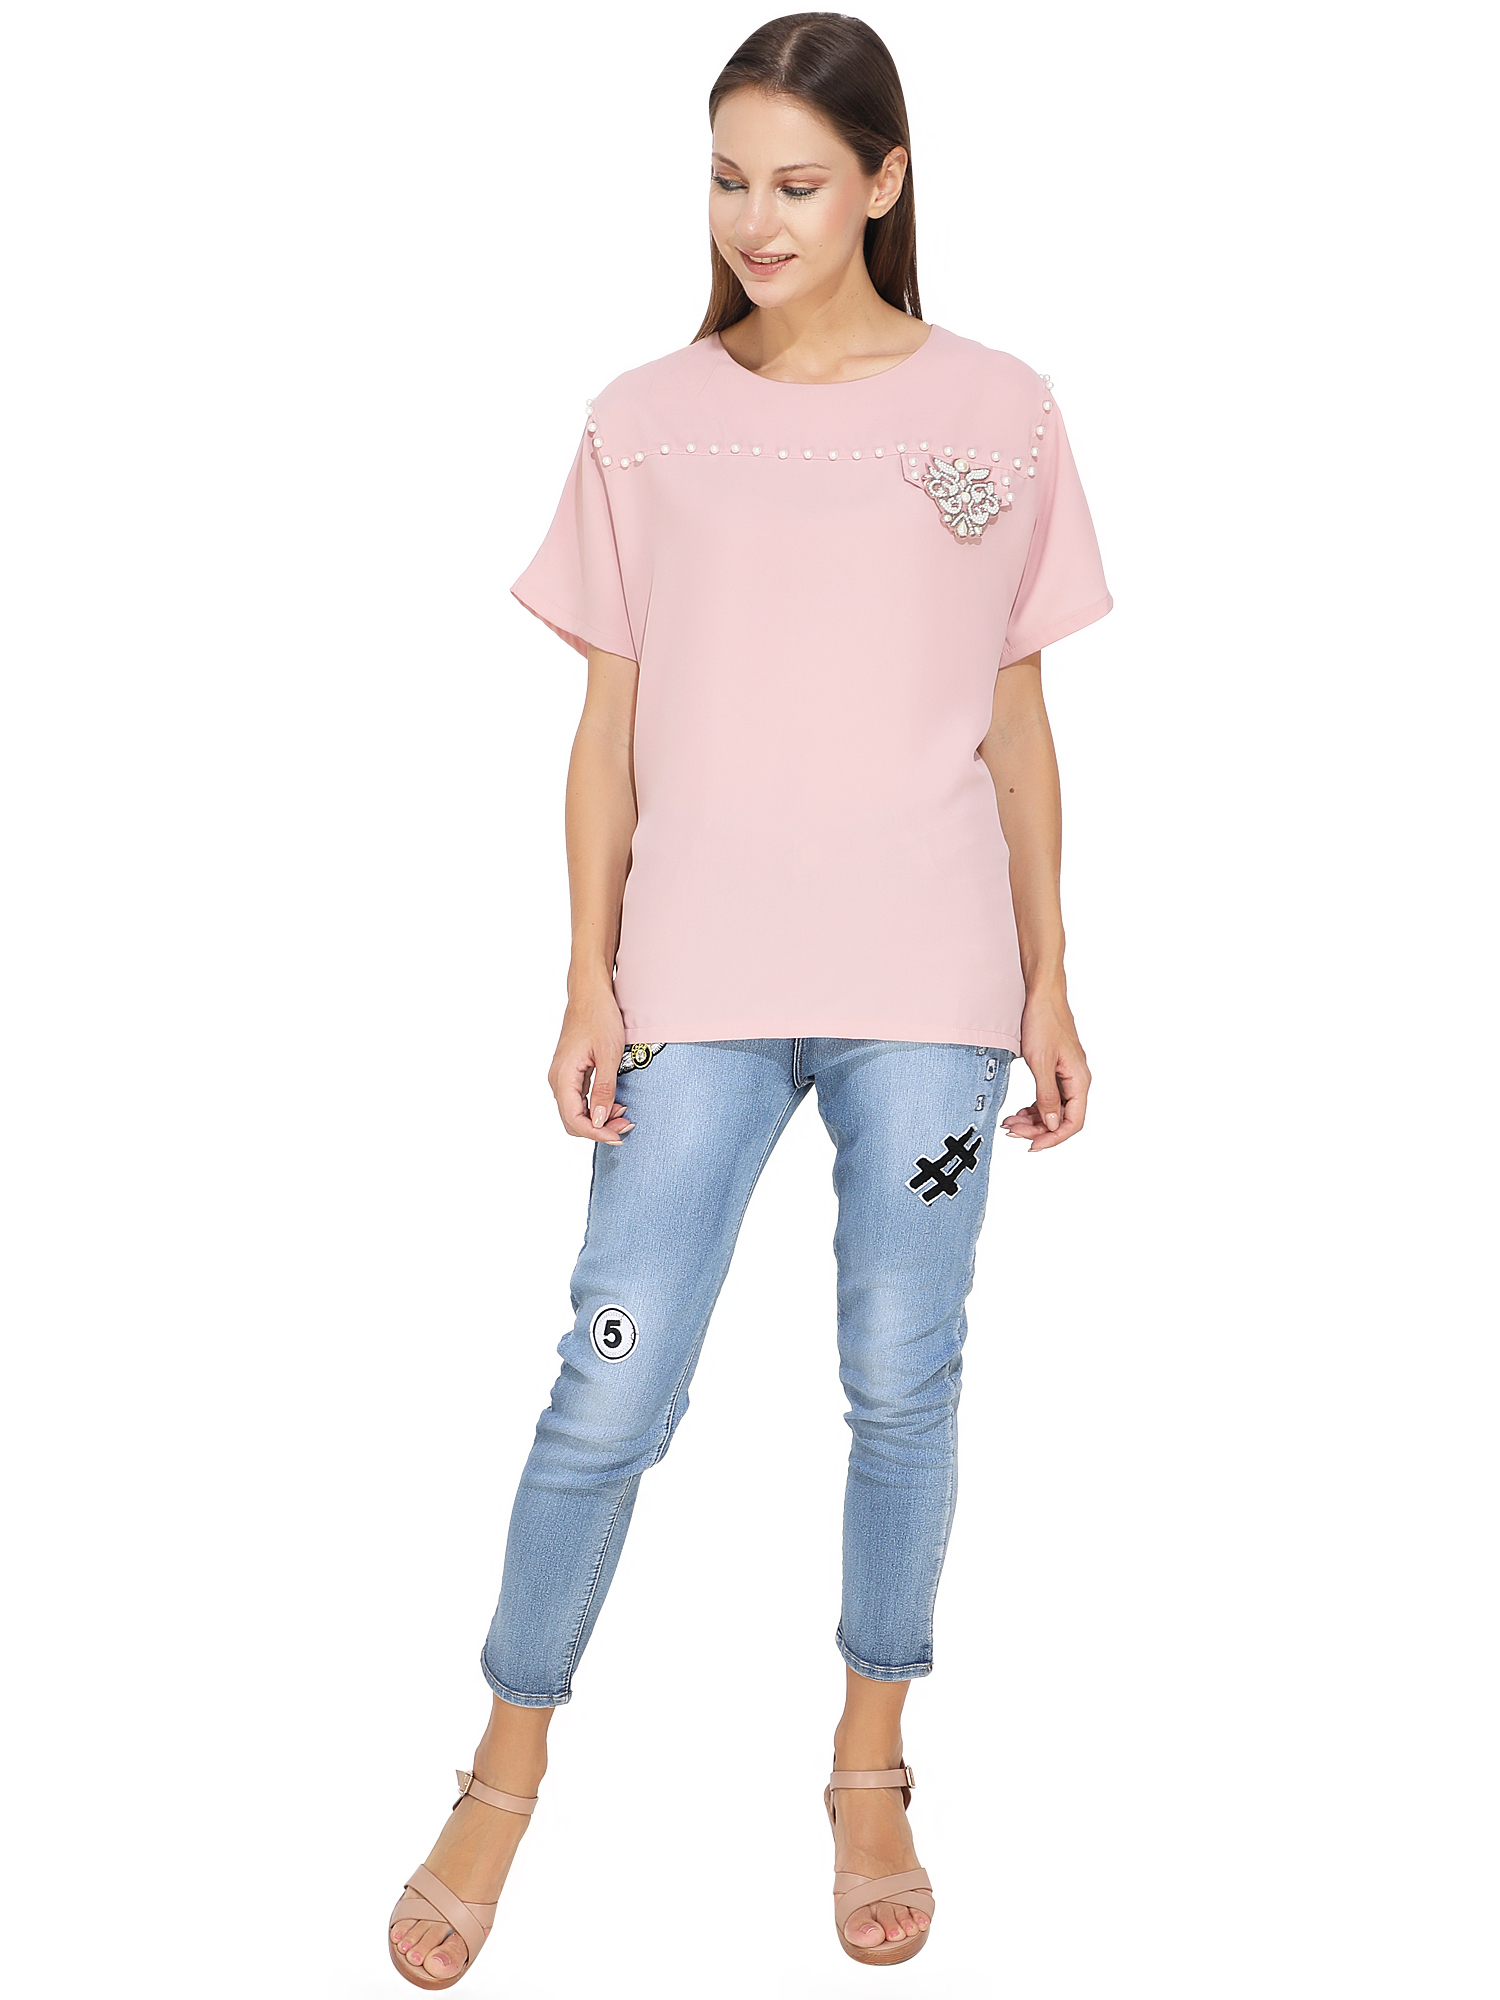 White Pearl Studded Powder Pink T-Shirt